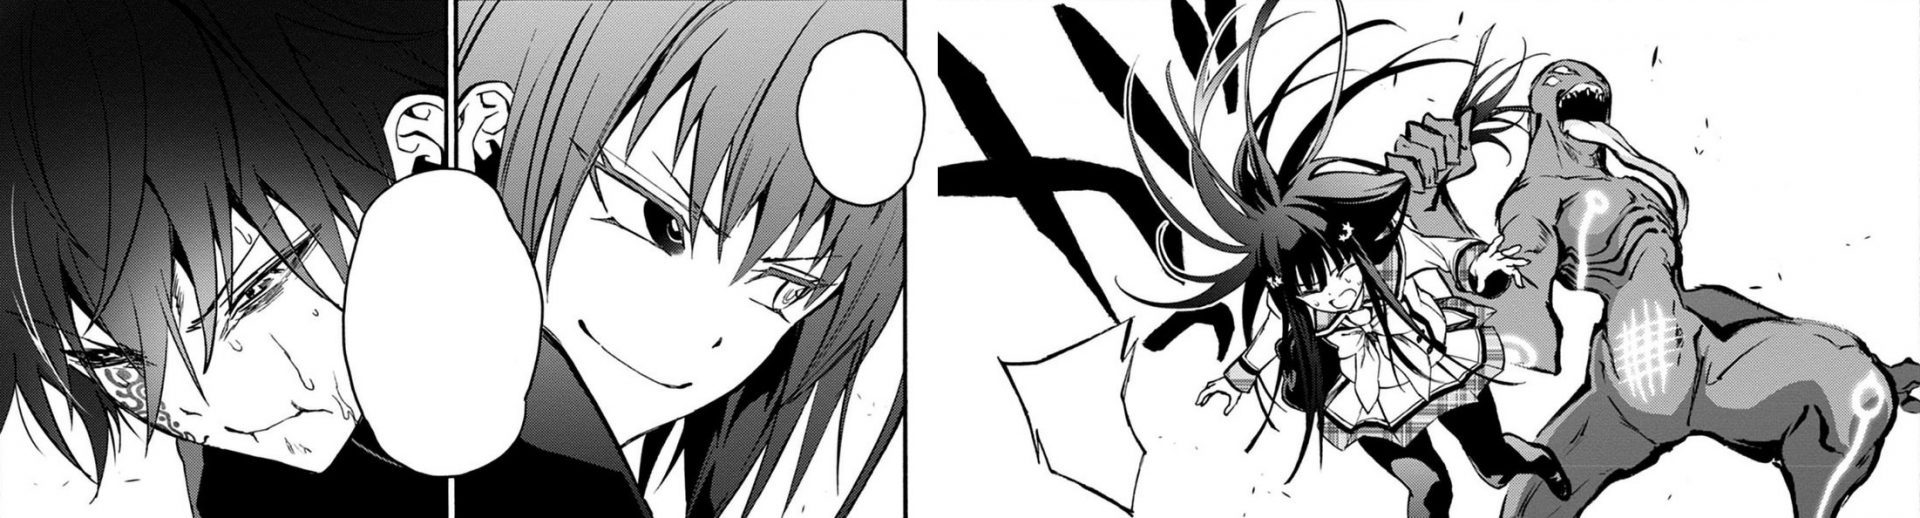 Twin Star Exorcists - Recensione del manga